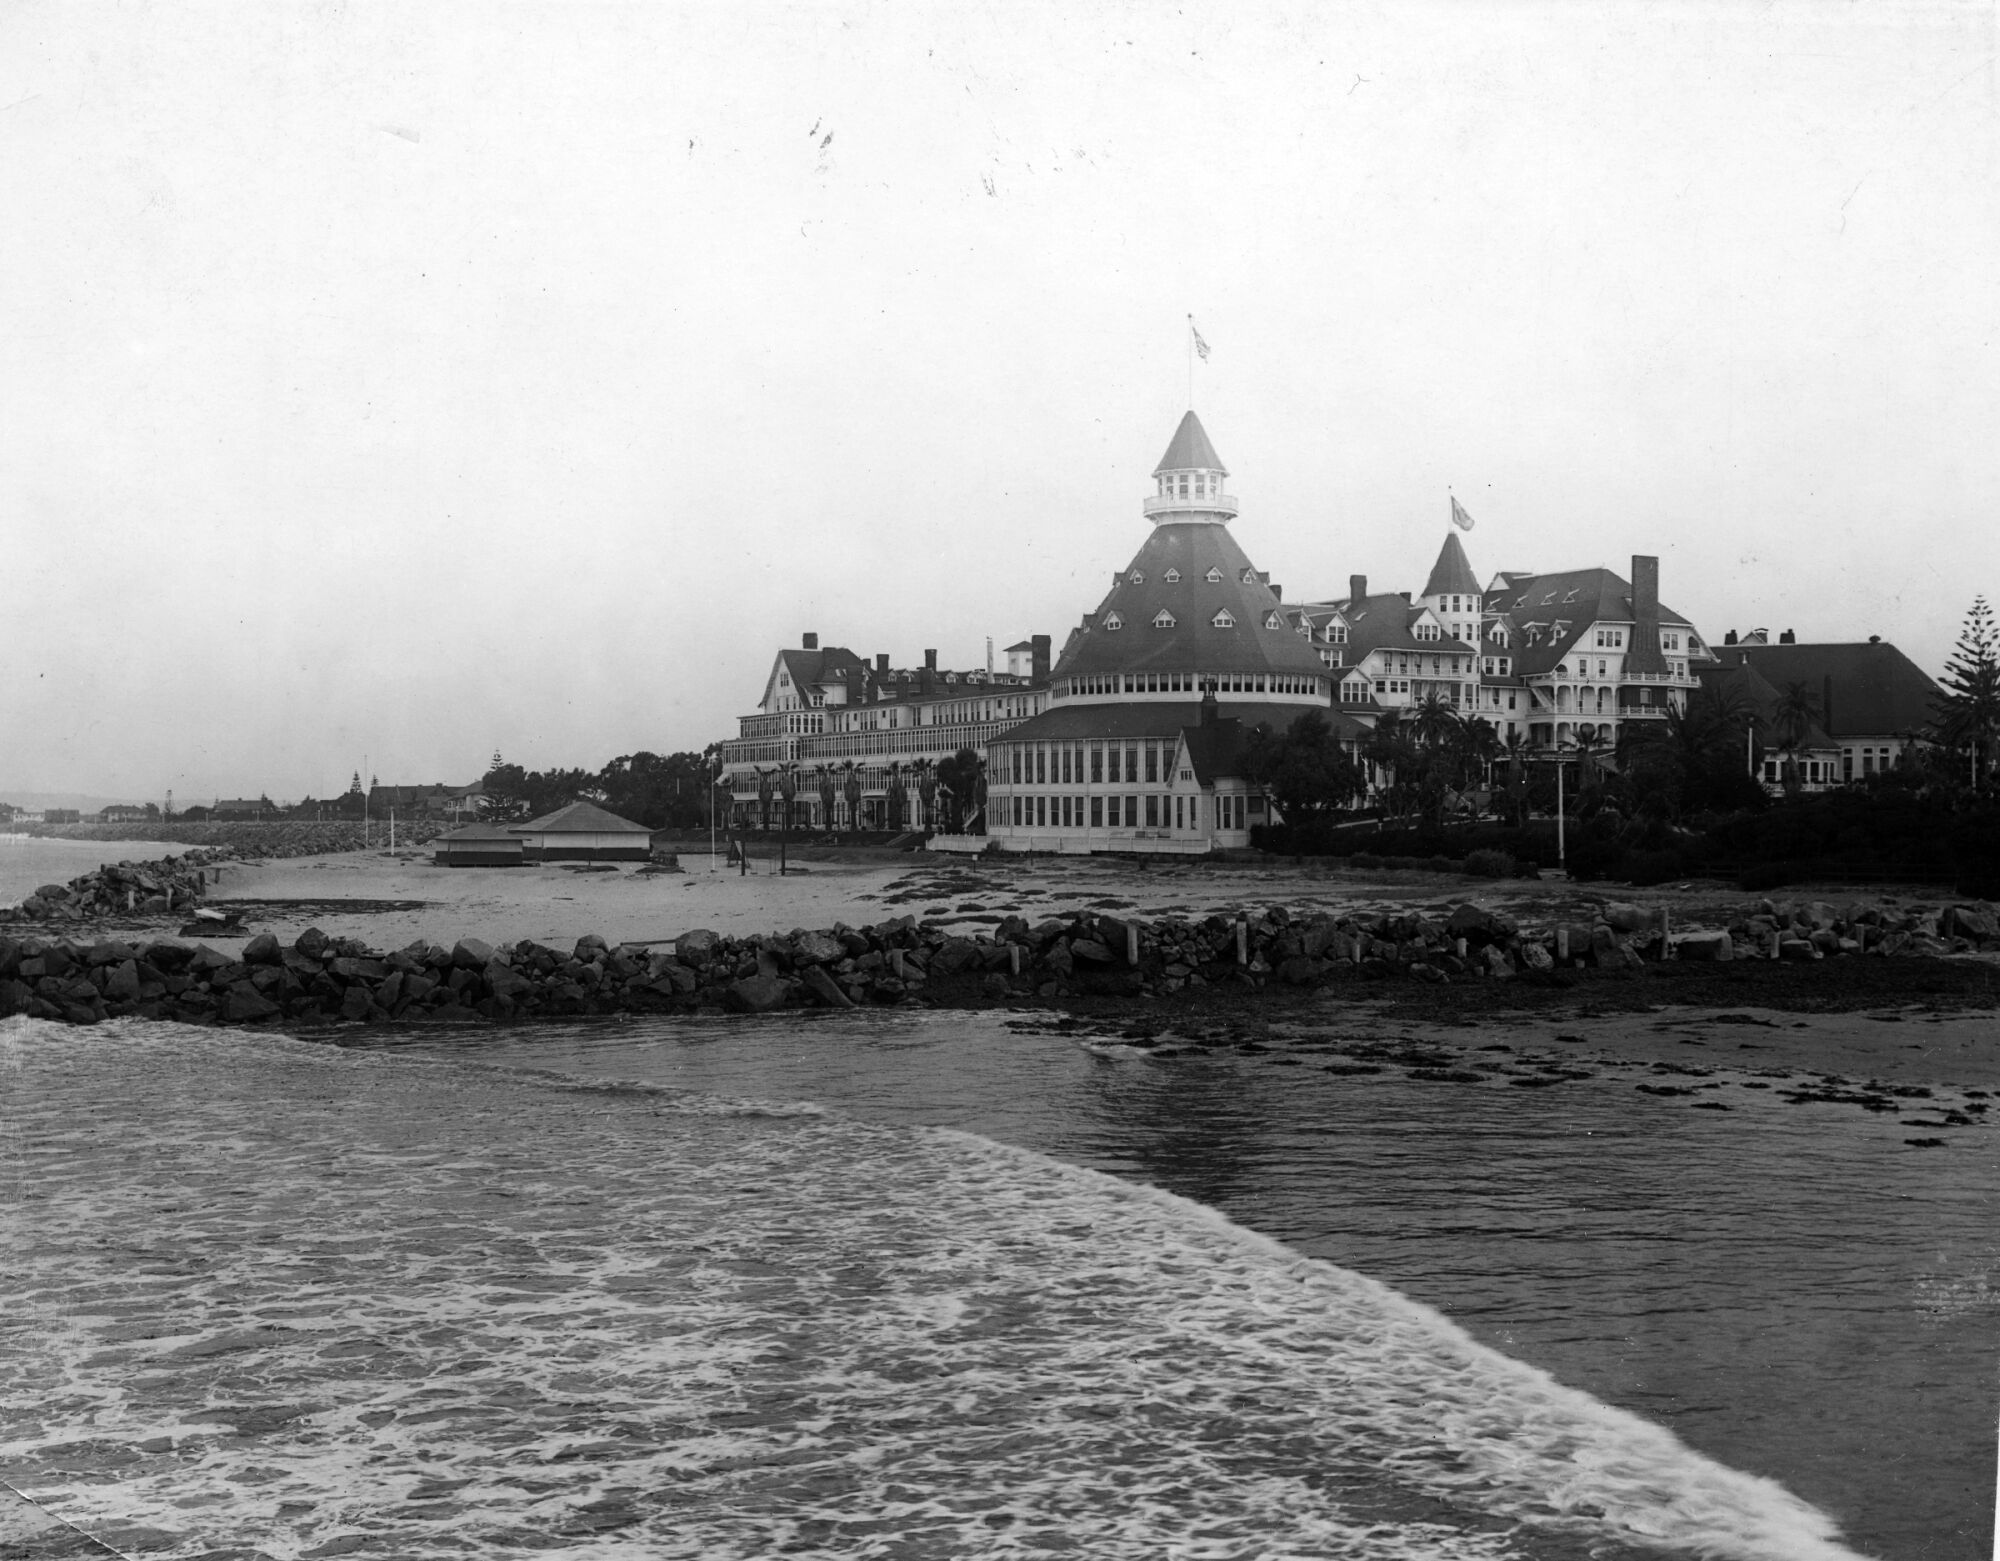 A historical photo of Hotel del Coronado